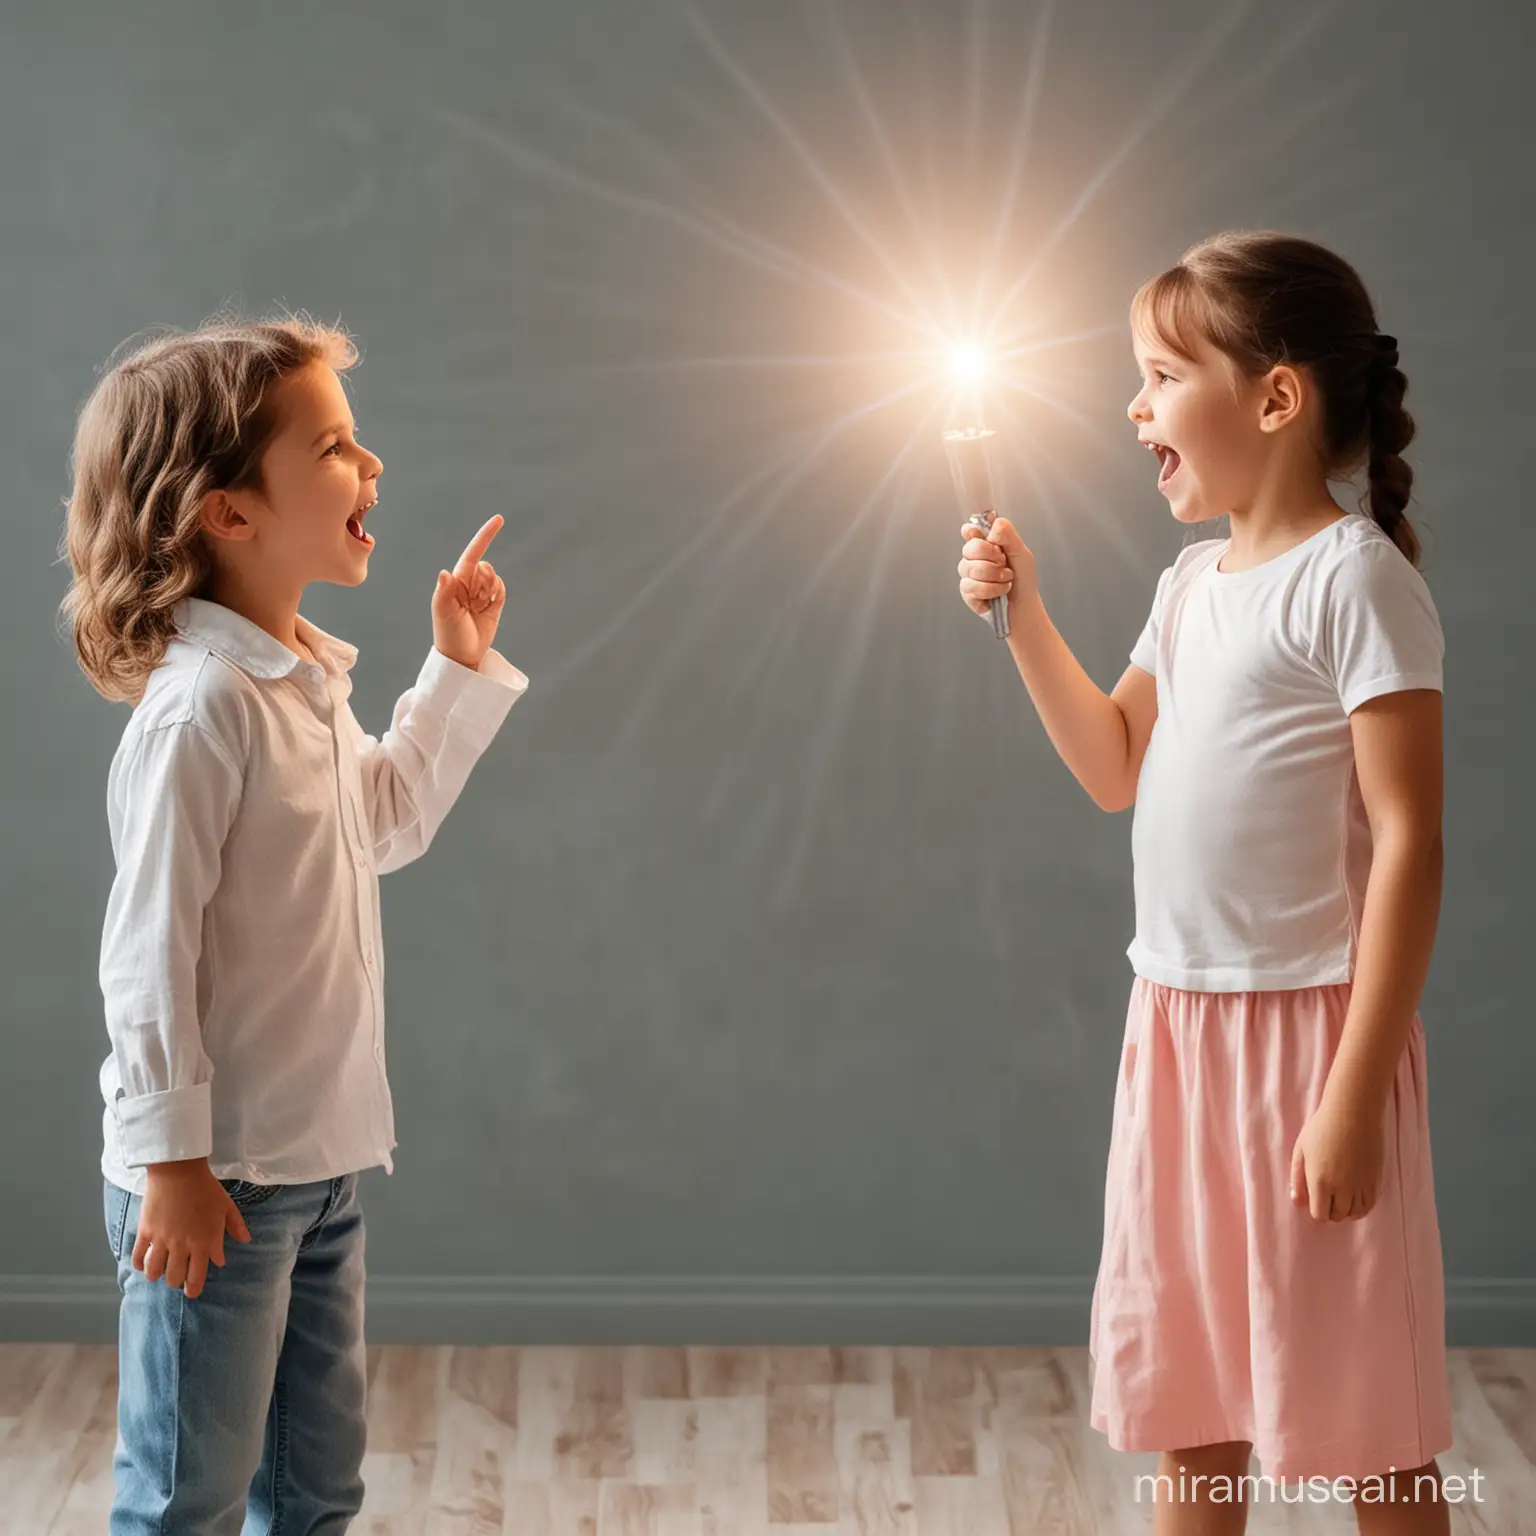 2 kids speaking with good energy